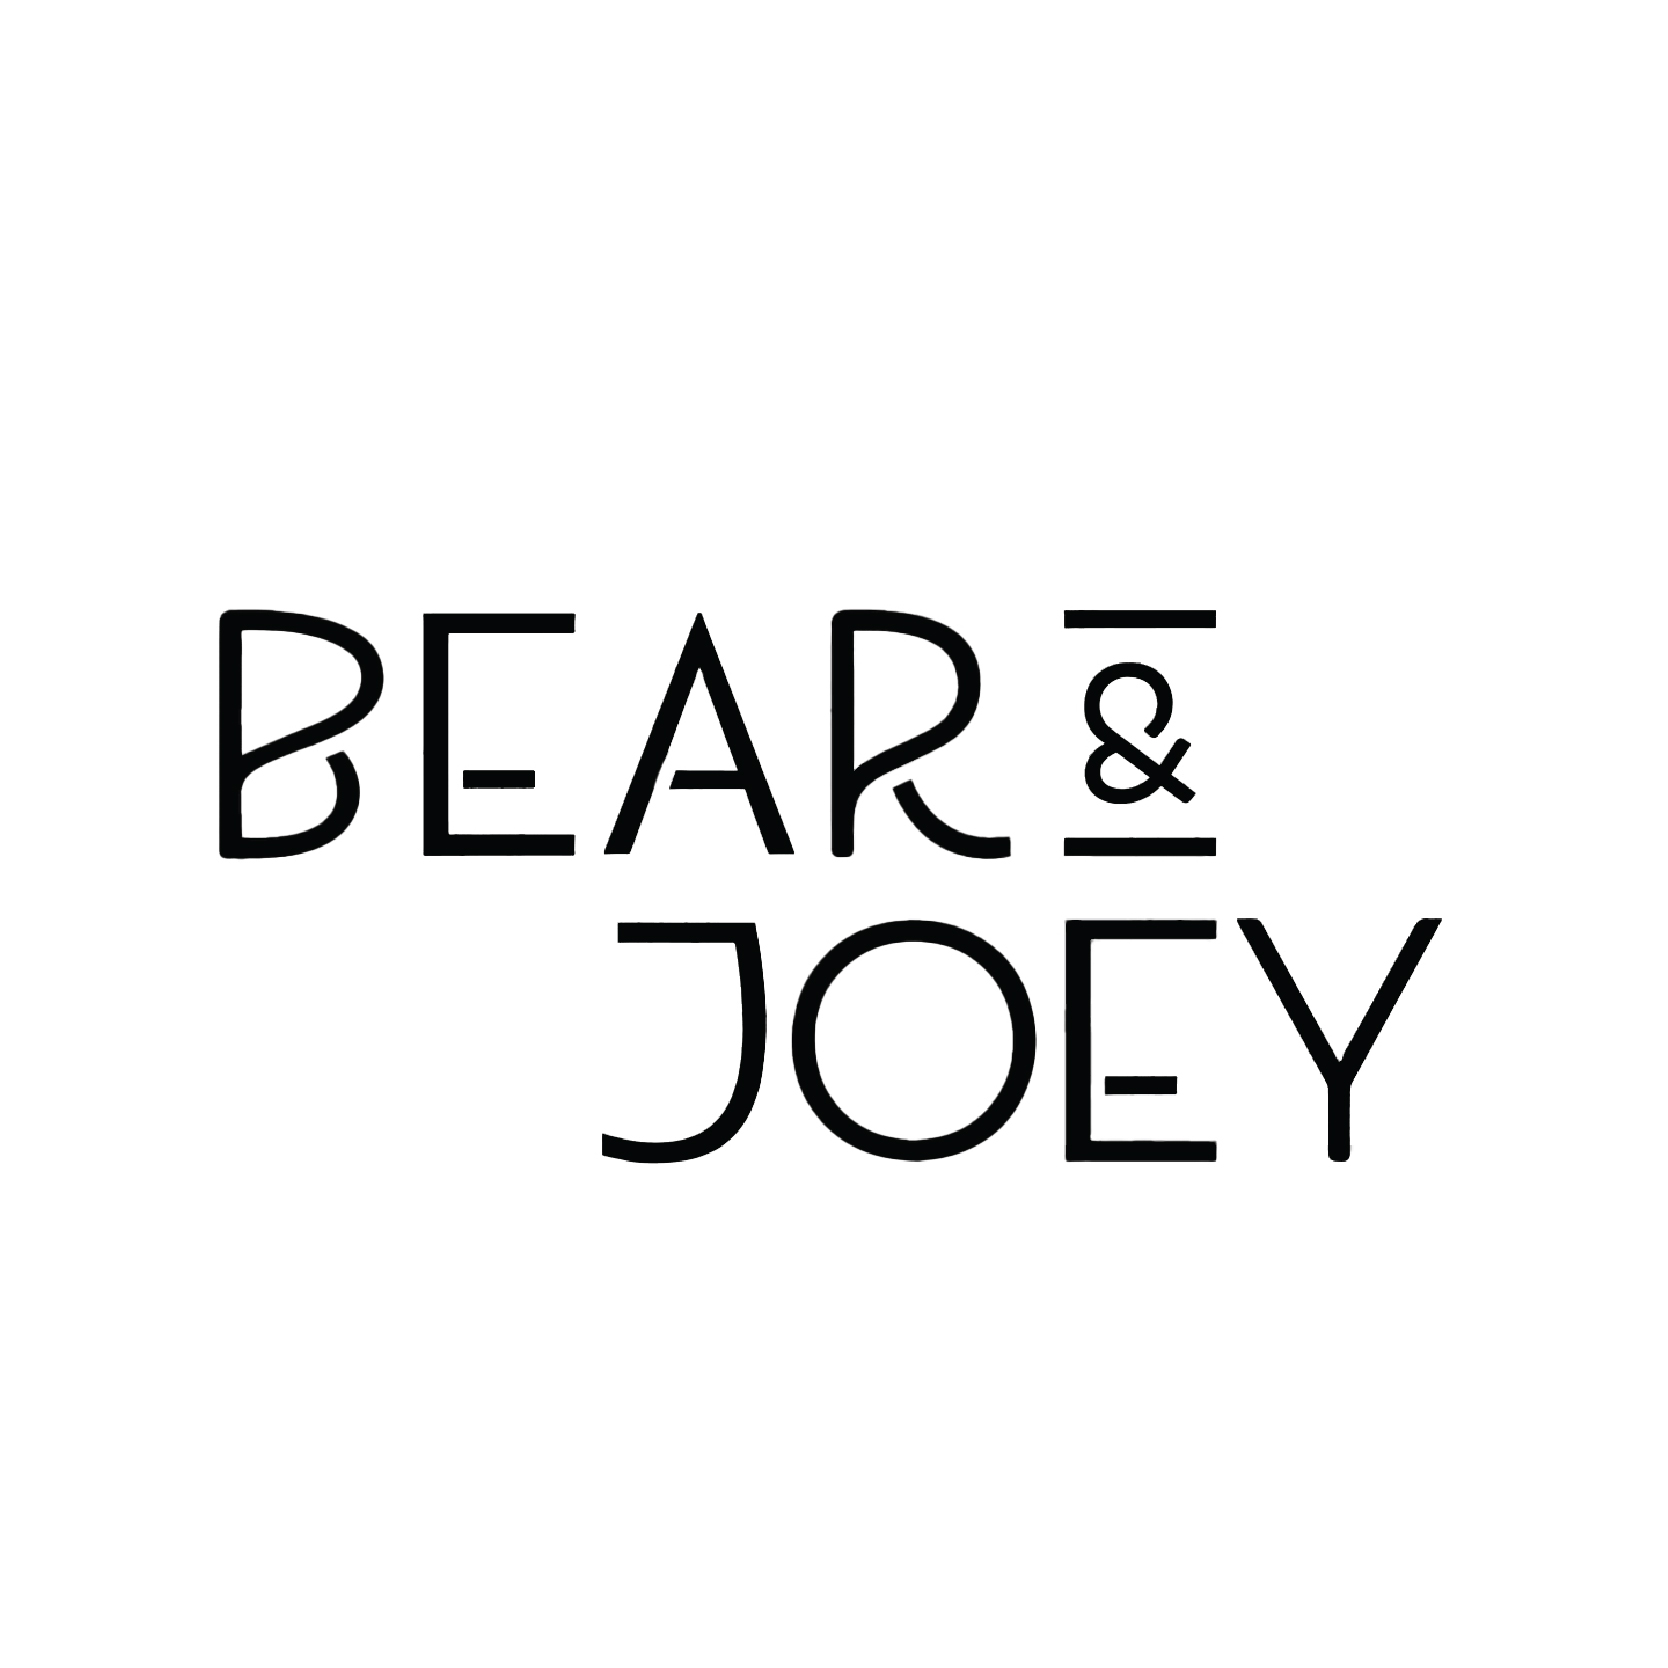 Bear & Joey